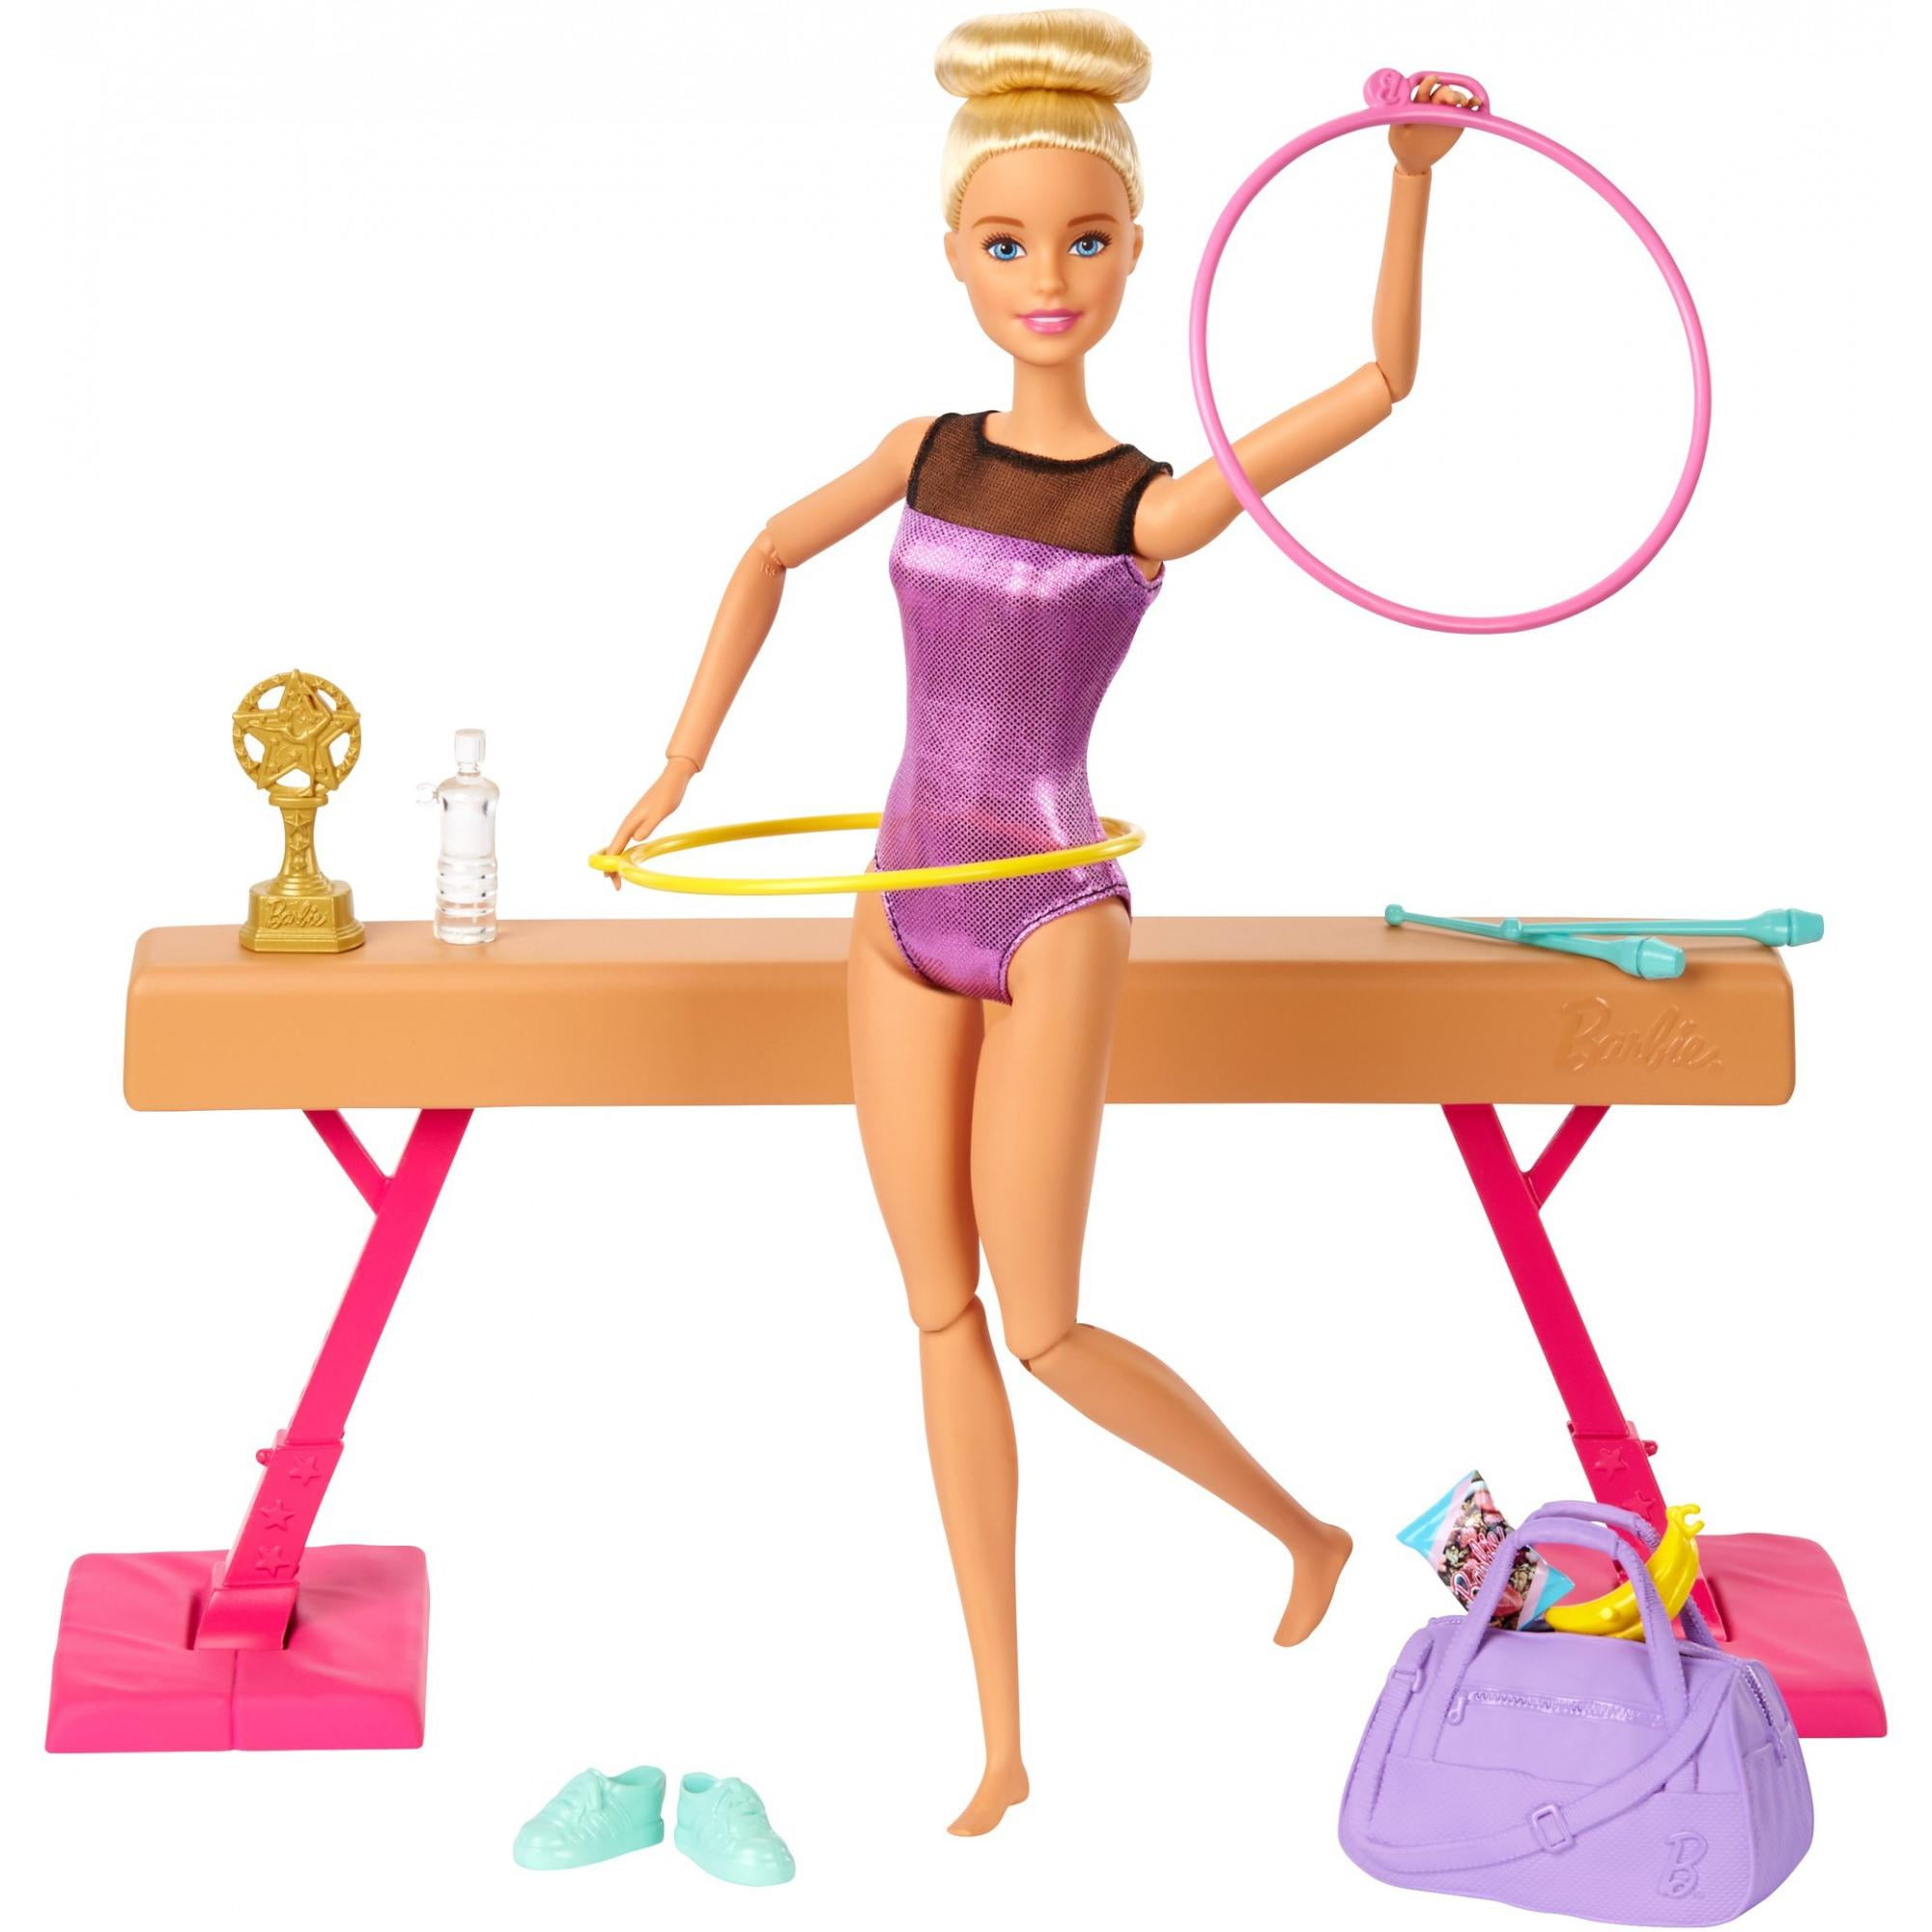 Barbie Team Stacie Doll & Gymnastics Play Set Spinning Bar & Accessories New 